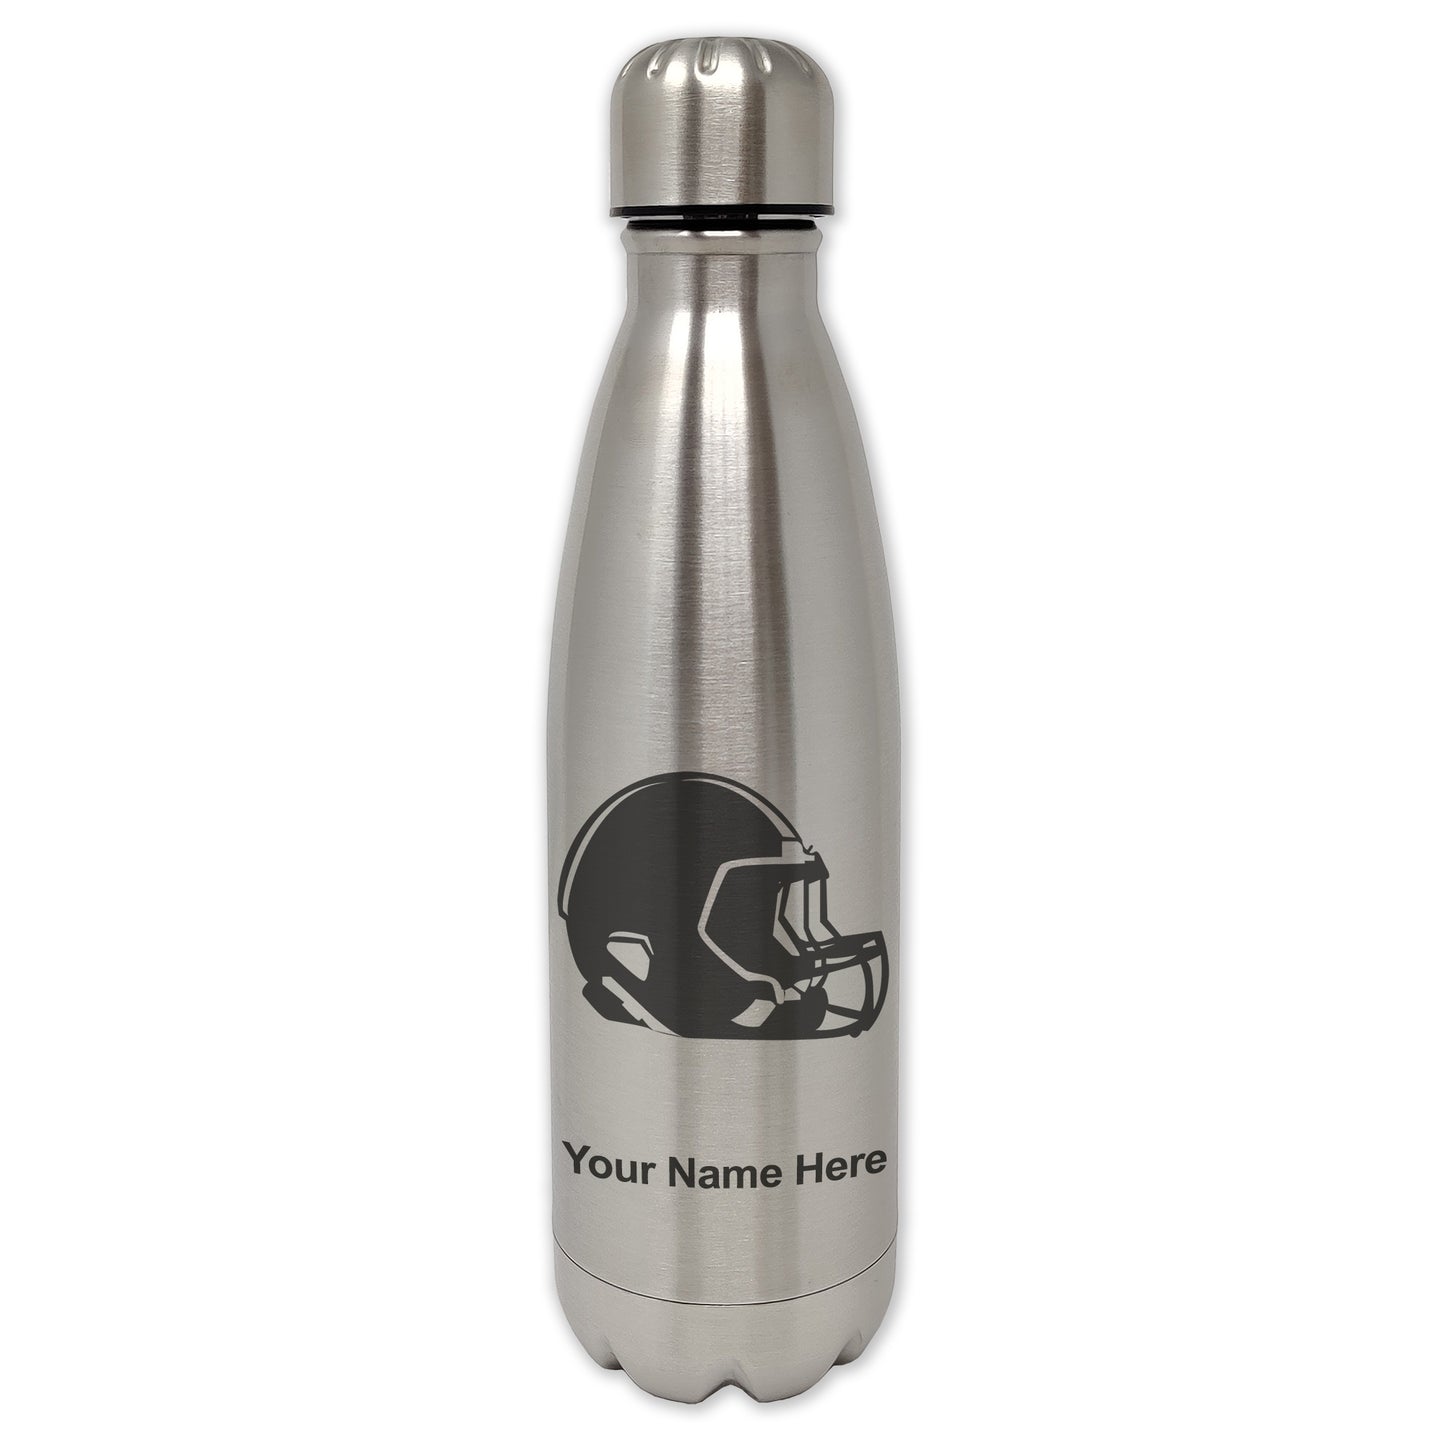 LaserGram Single Wall Water Bottle, Football Helmet, Personalized Engraving Included